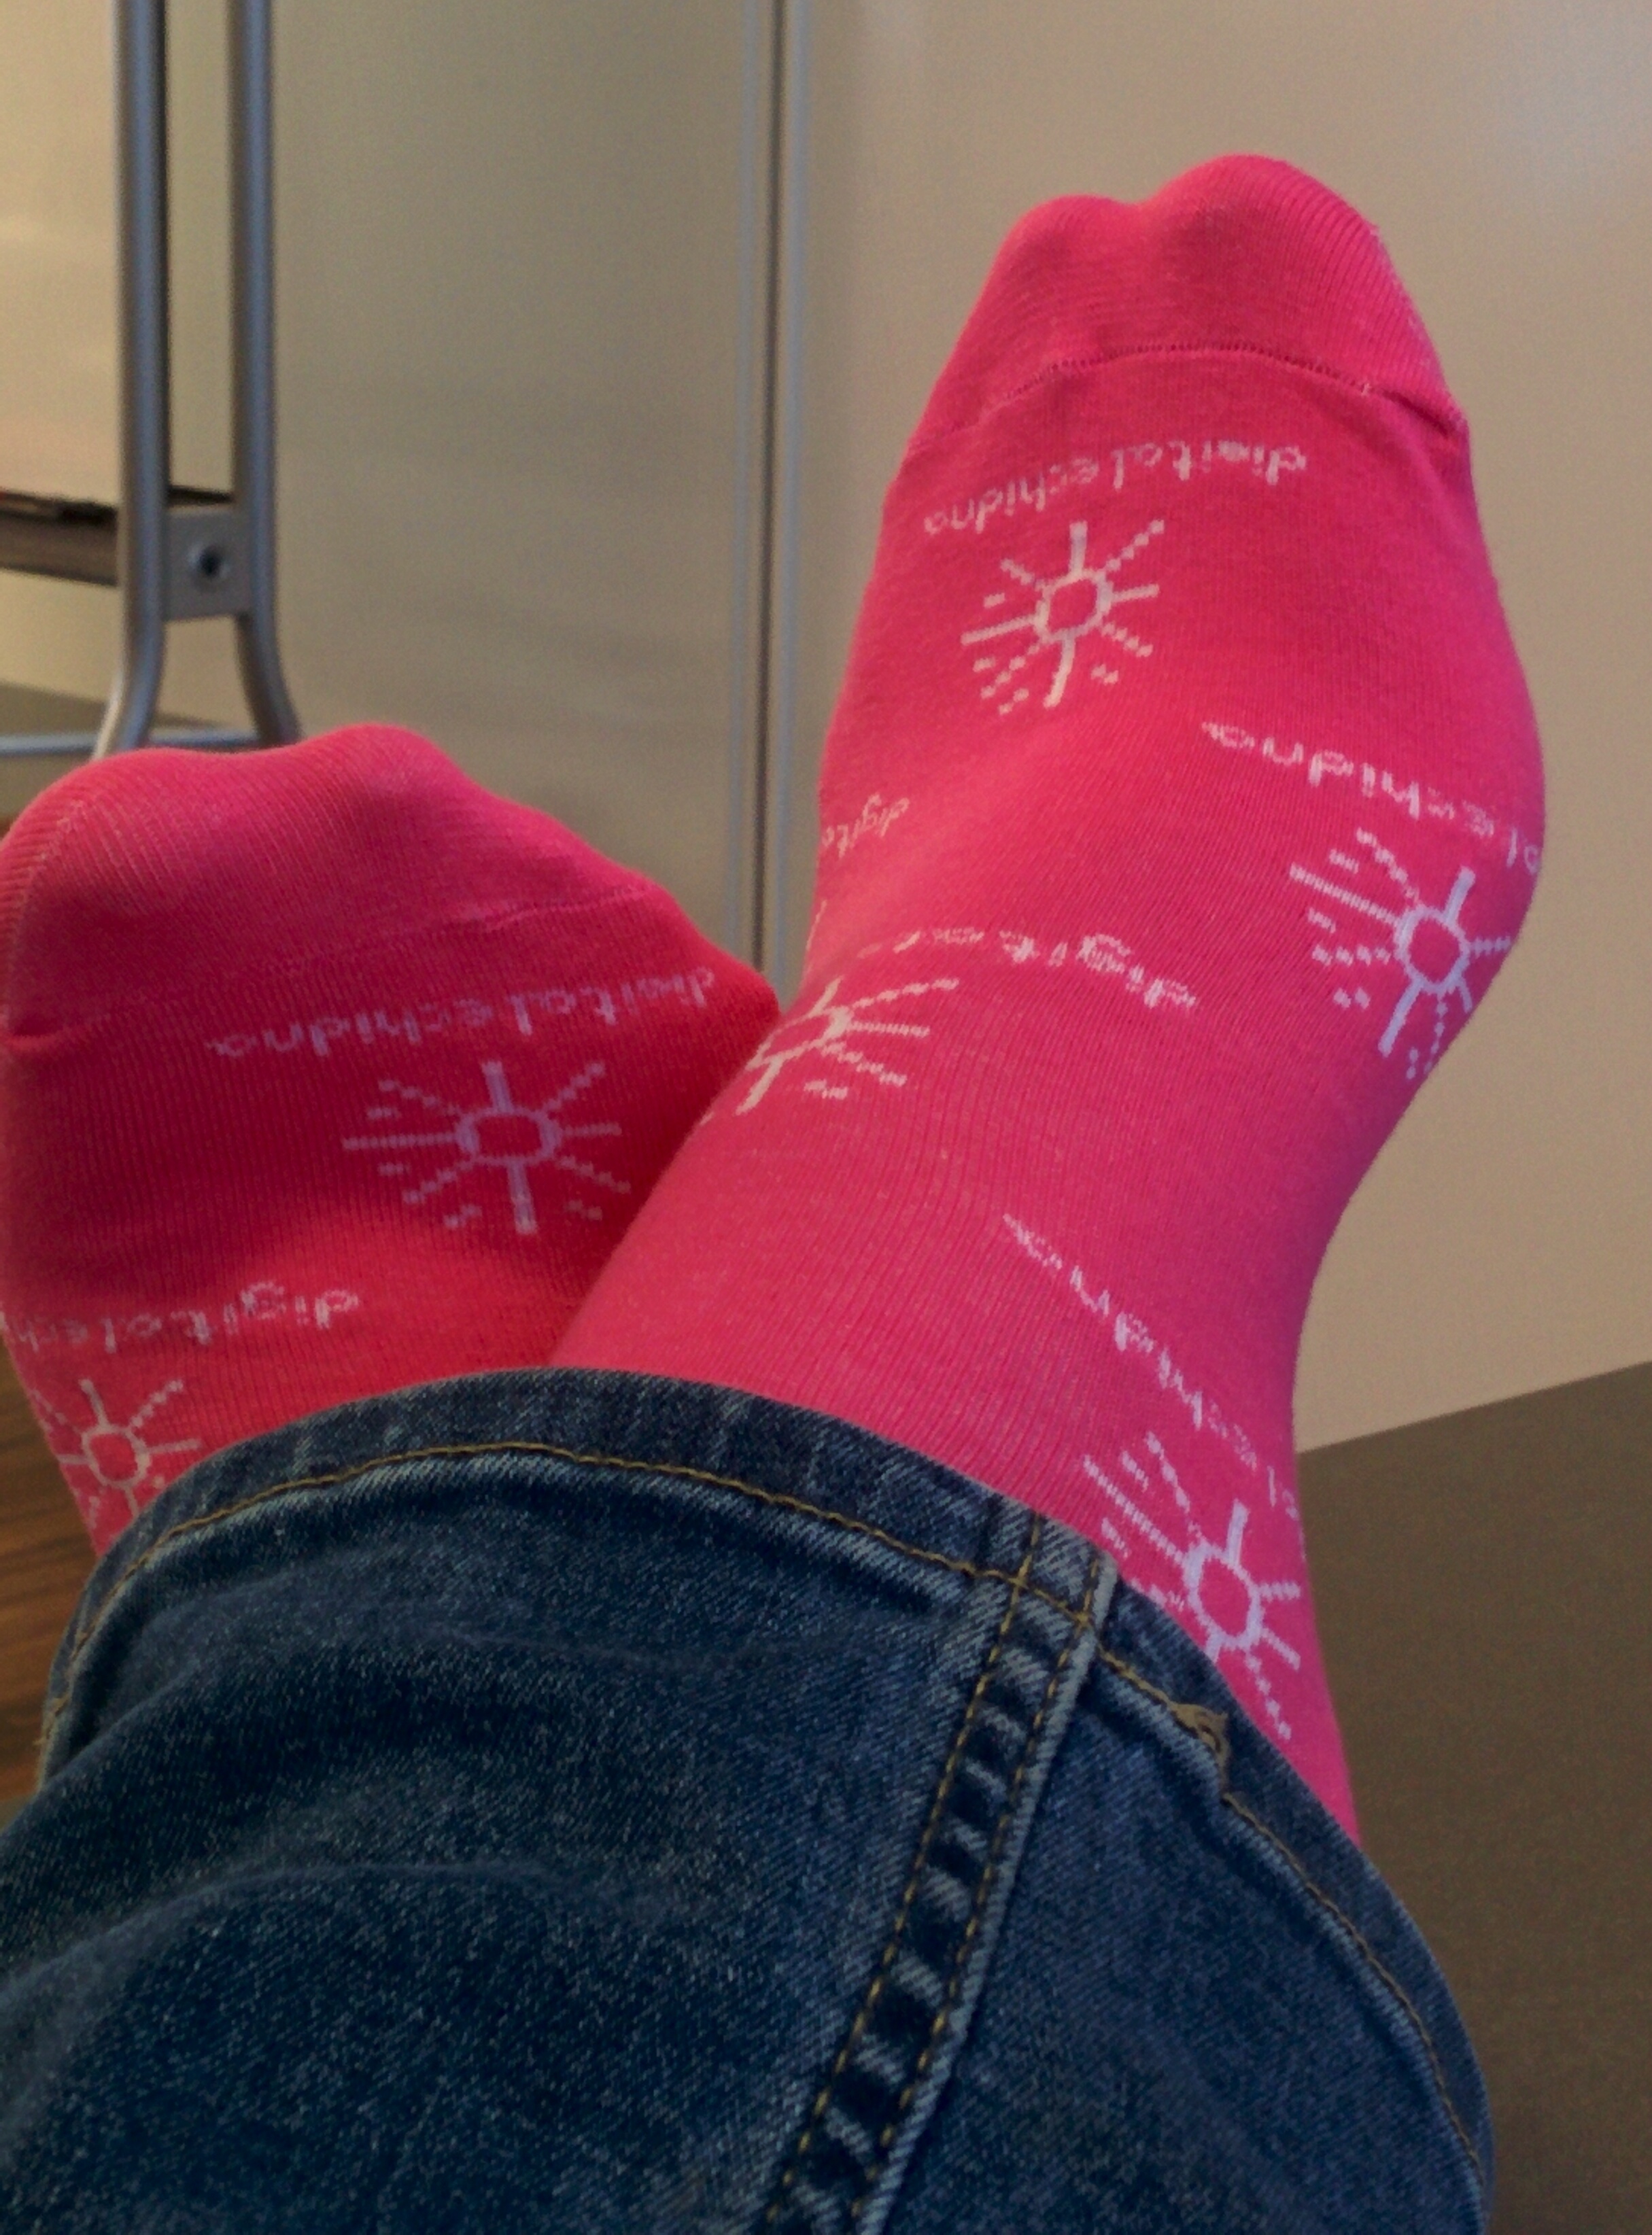 An image of someone wearing pink Digital Echidna socks